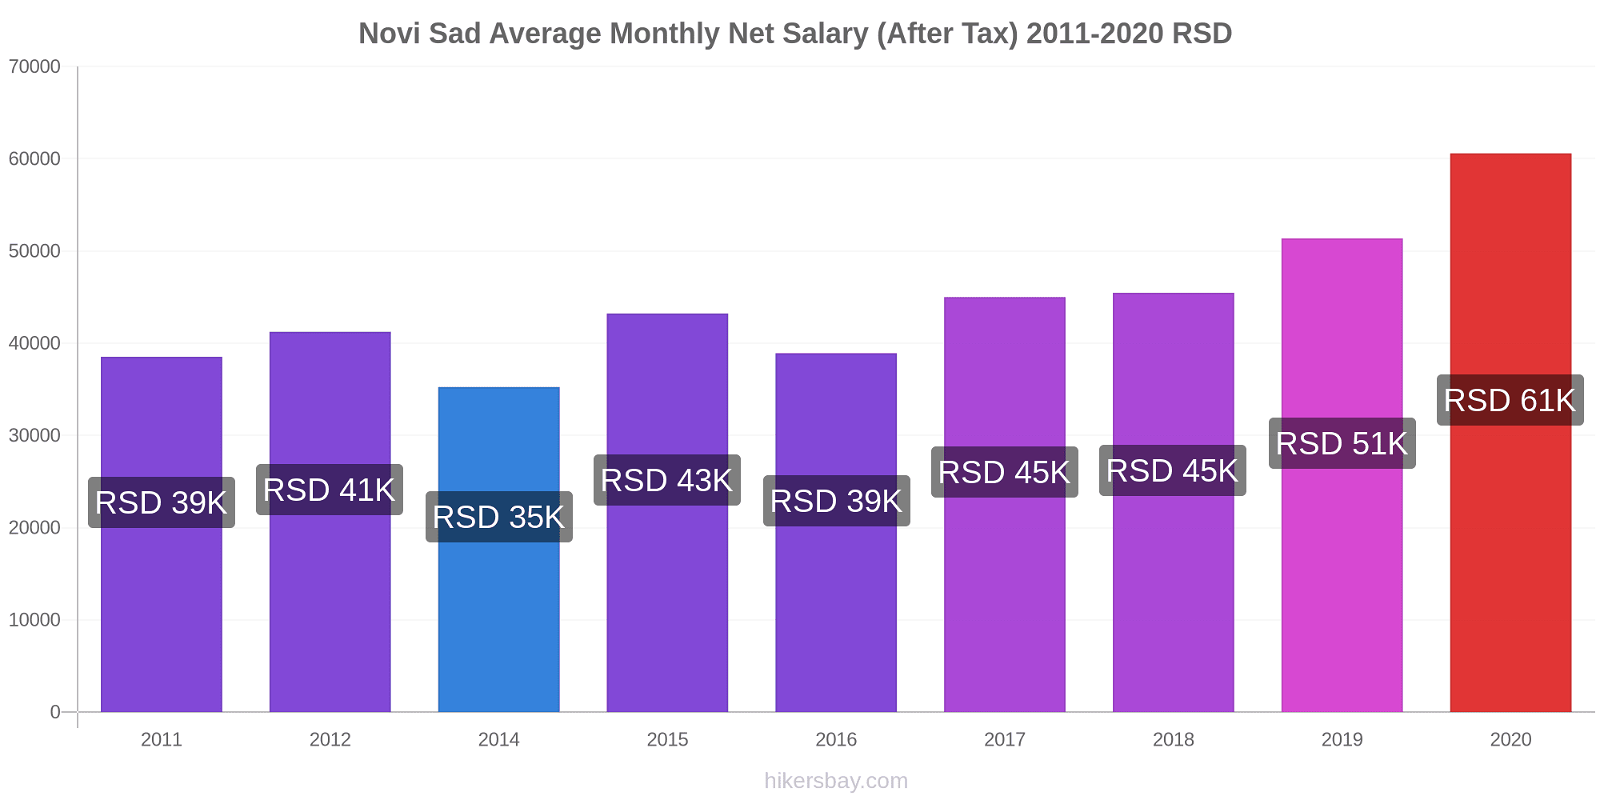 Novi Sad price changes Average Monthly Net Salary (After Tax) hikersbay.com